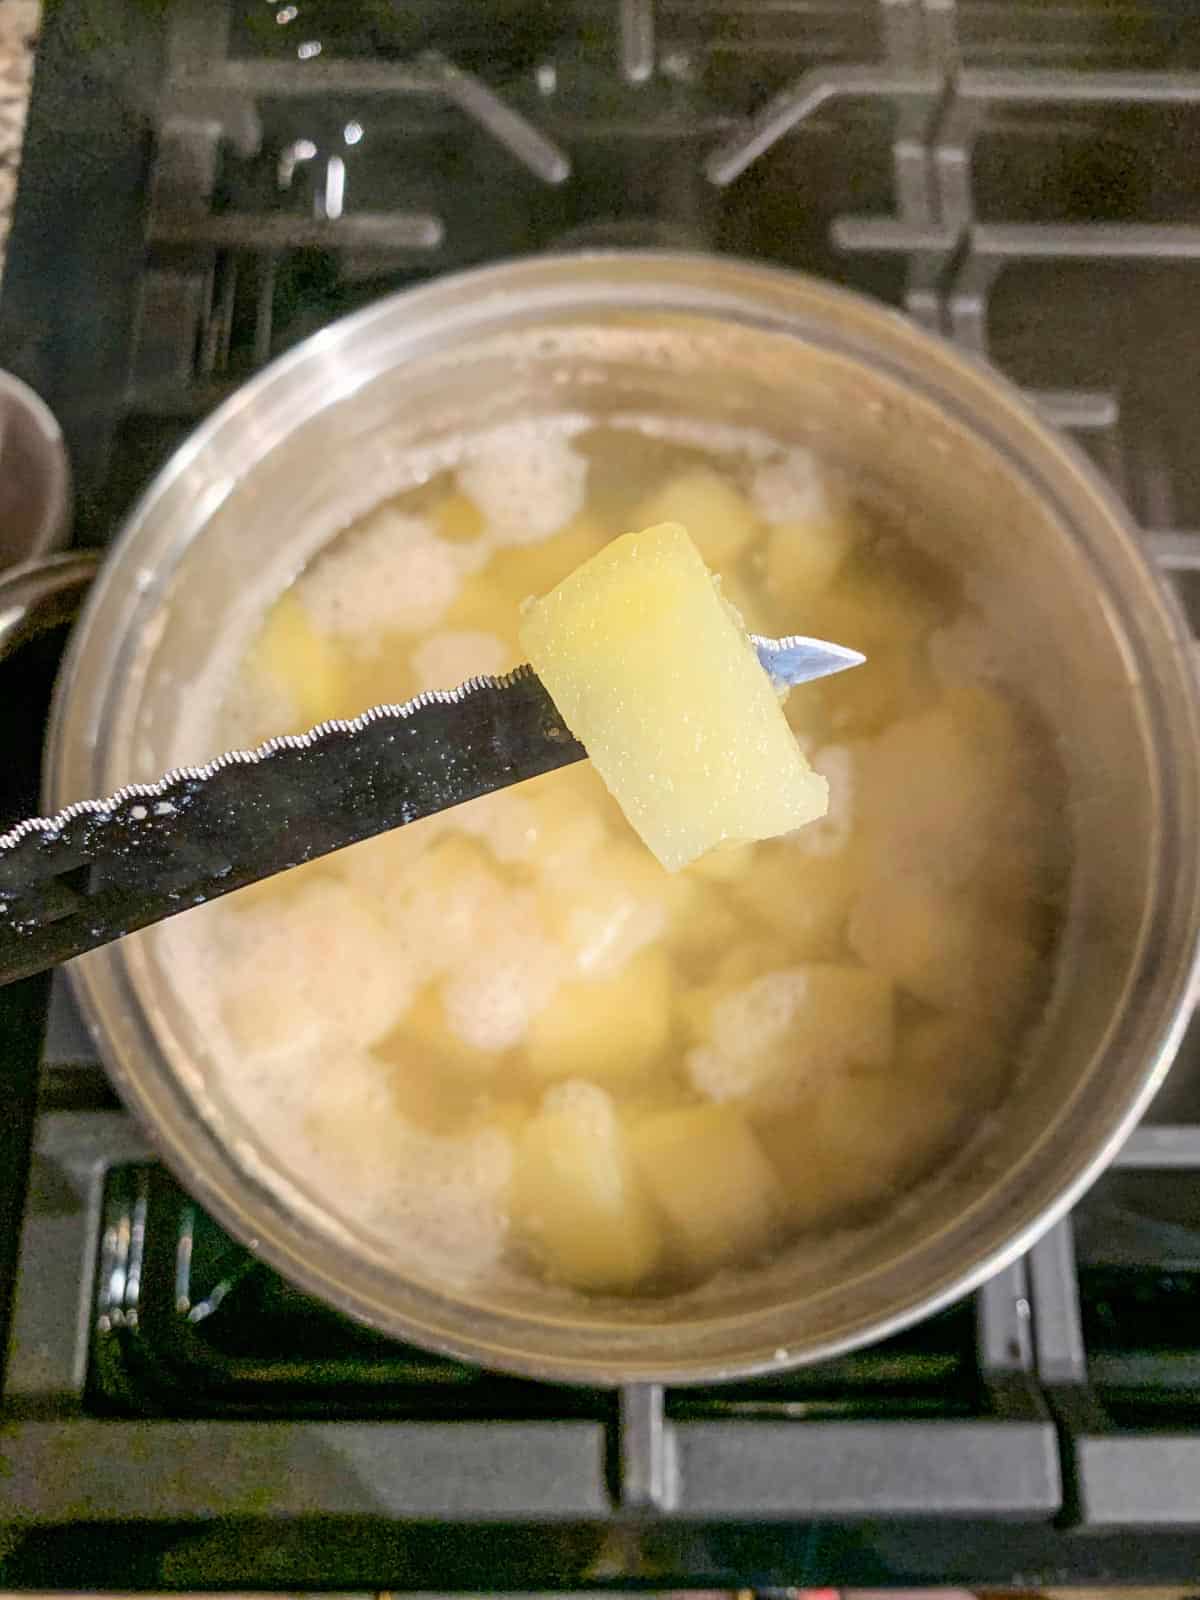 Knife through one diced potato in a pot.